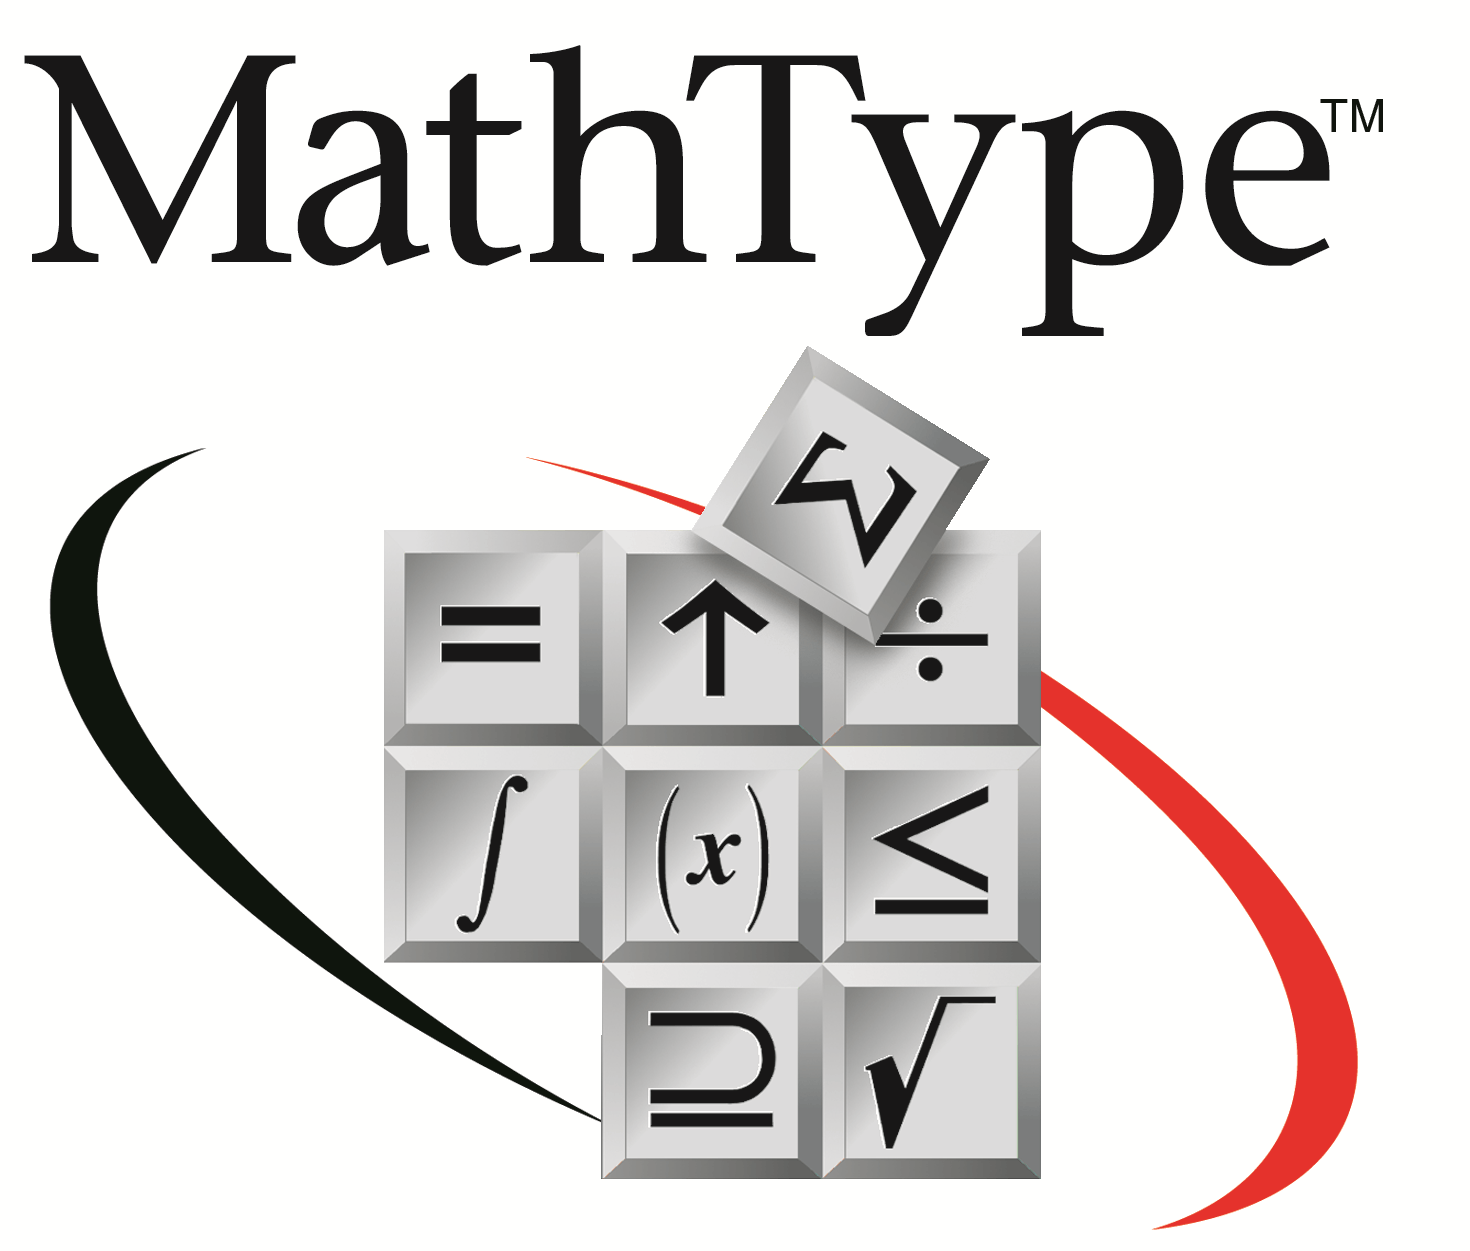 mathtype 7 product key download